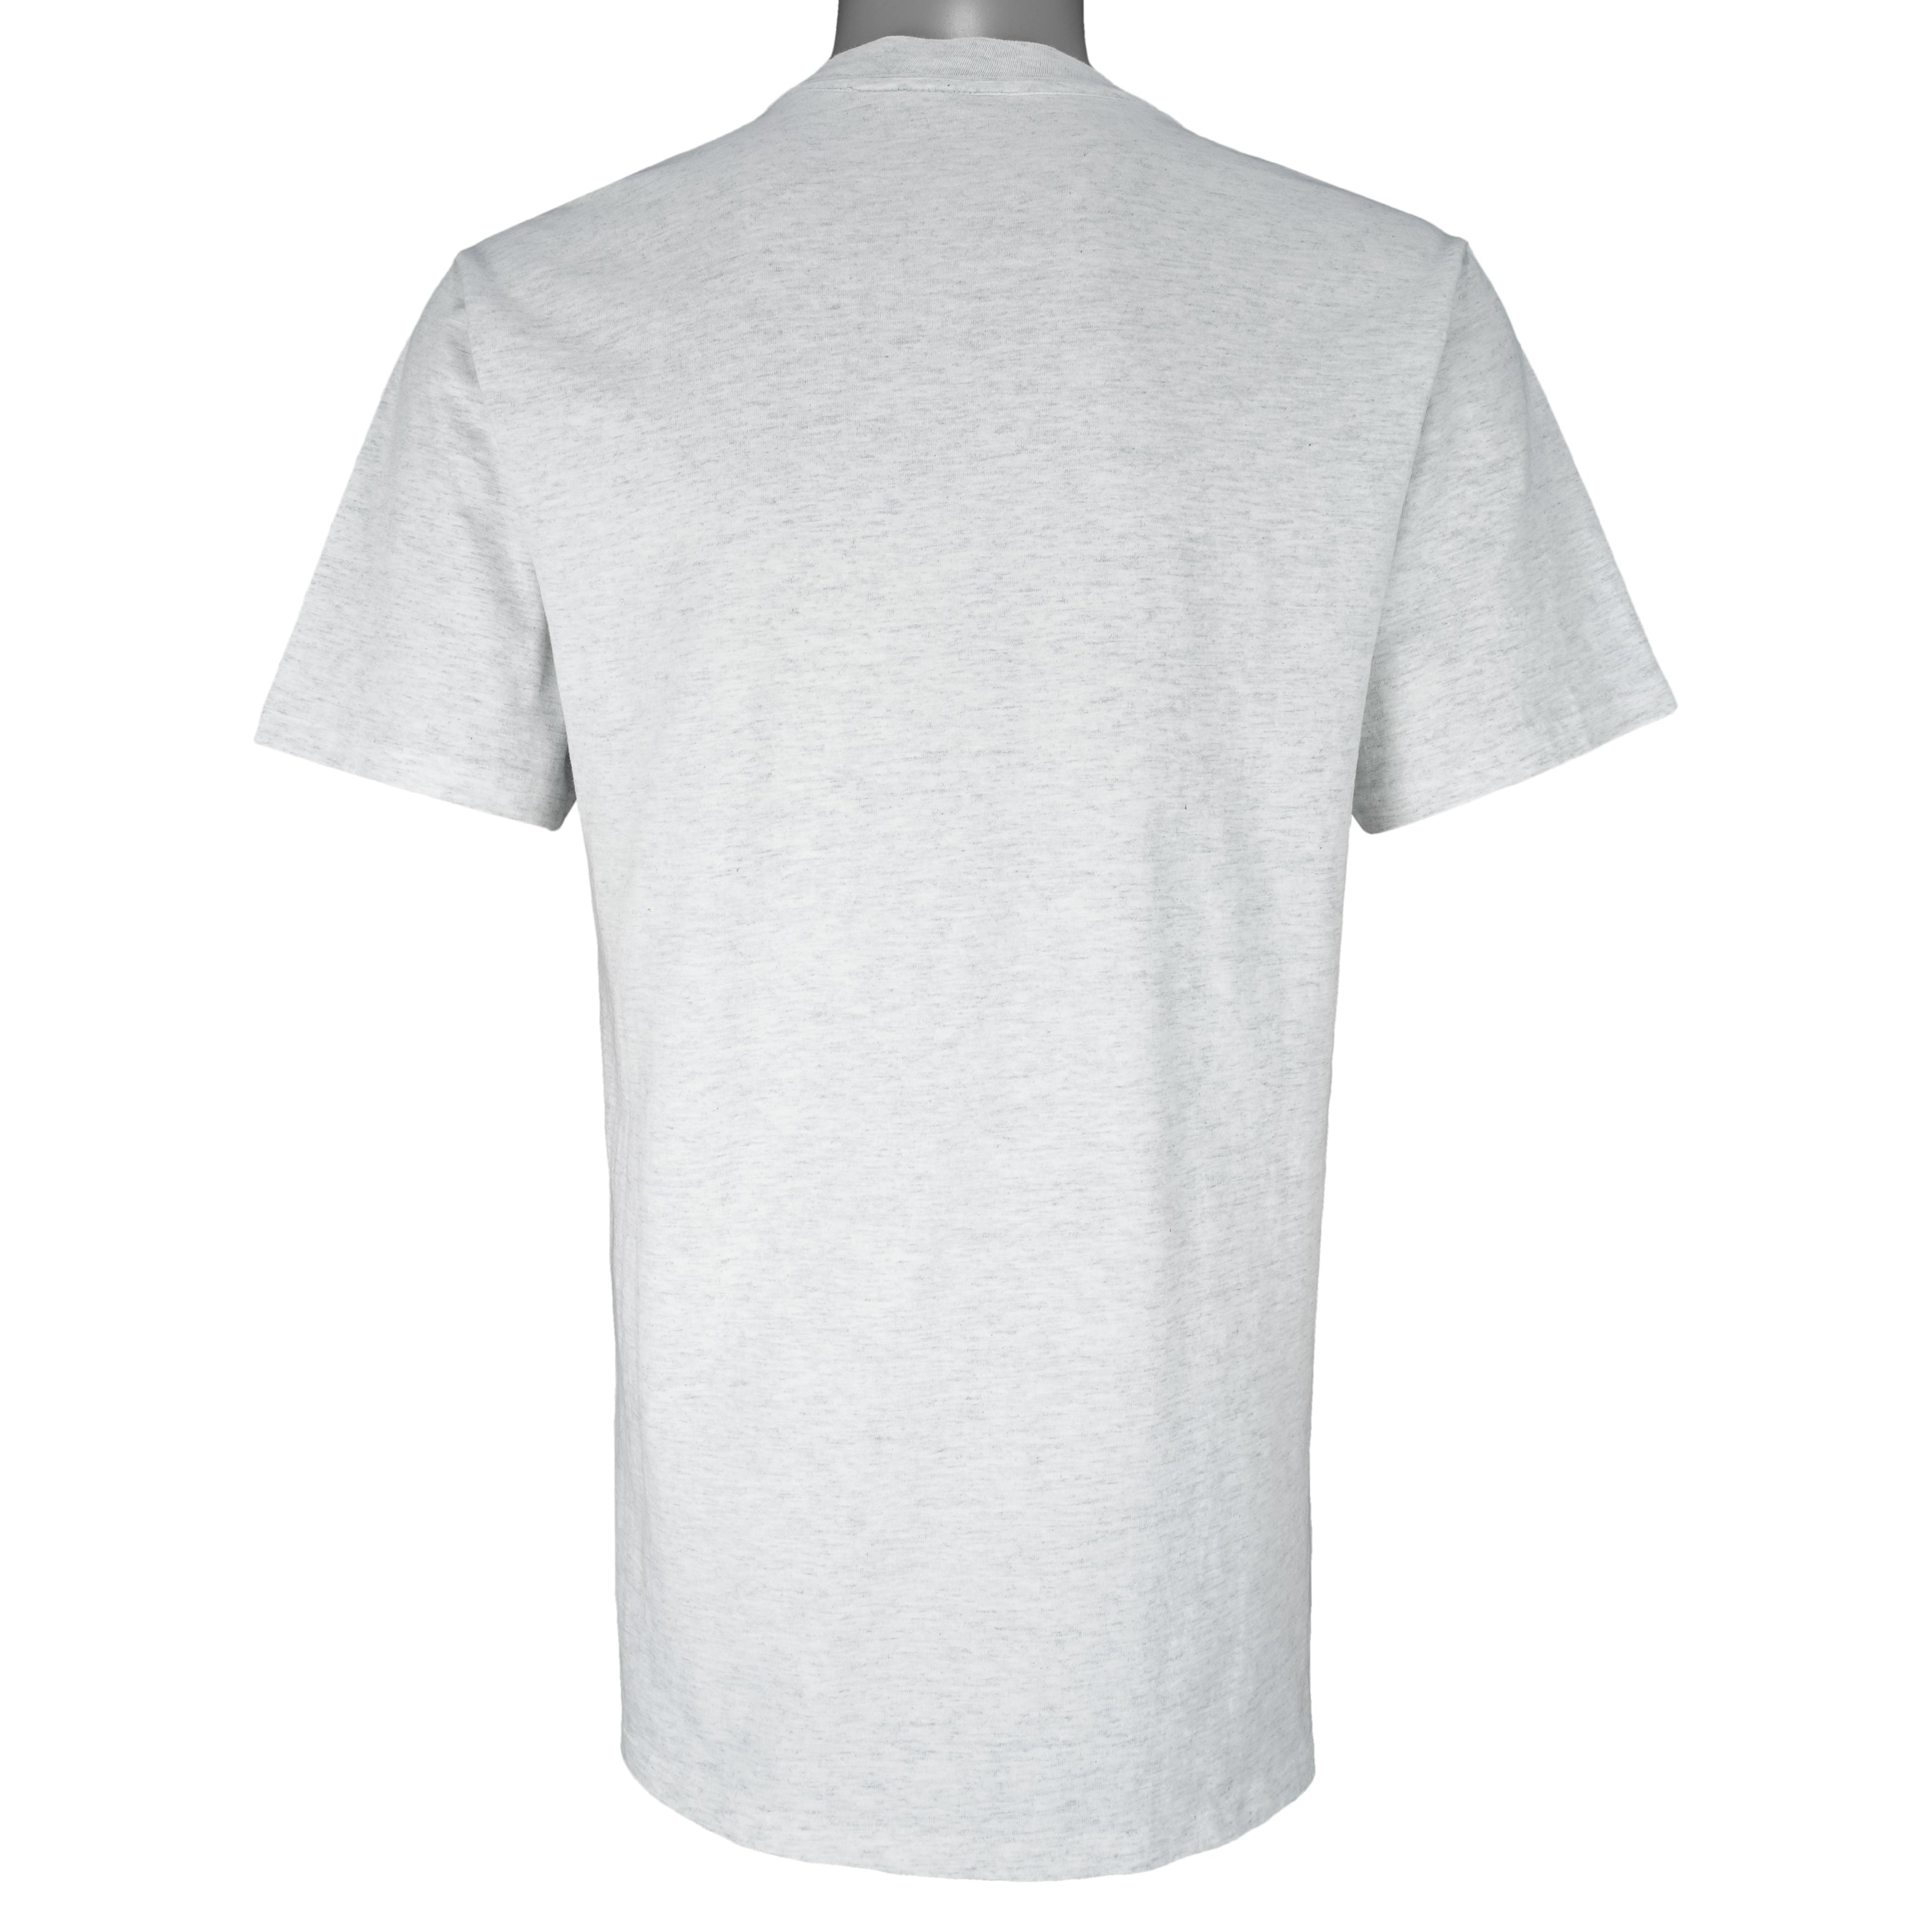 Vancouver Grizzlies logo T-shirt – Emilytees – Shop trending